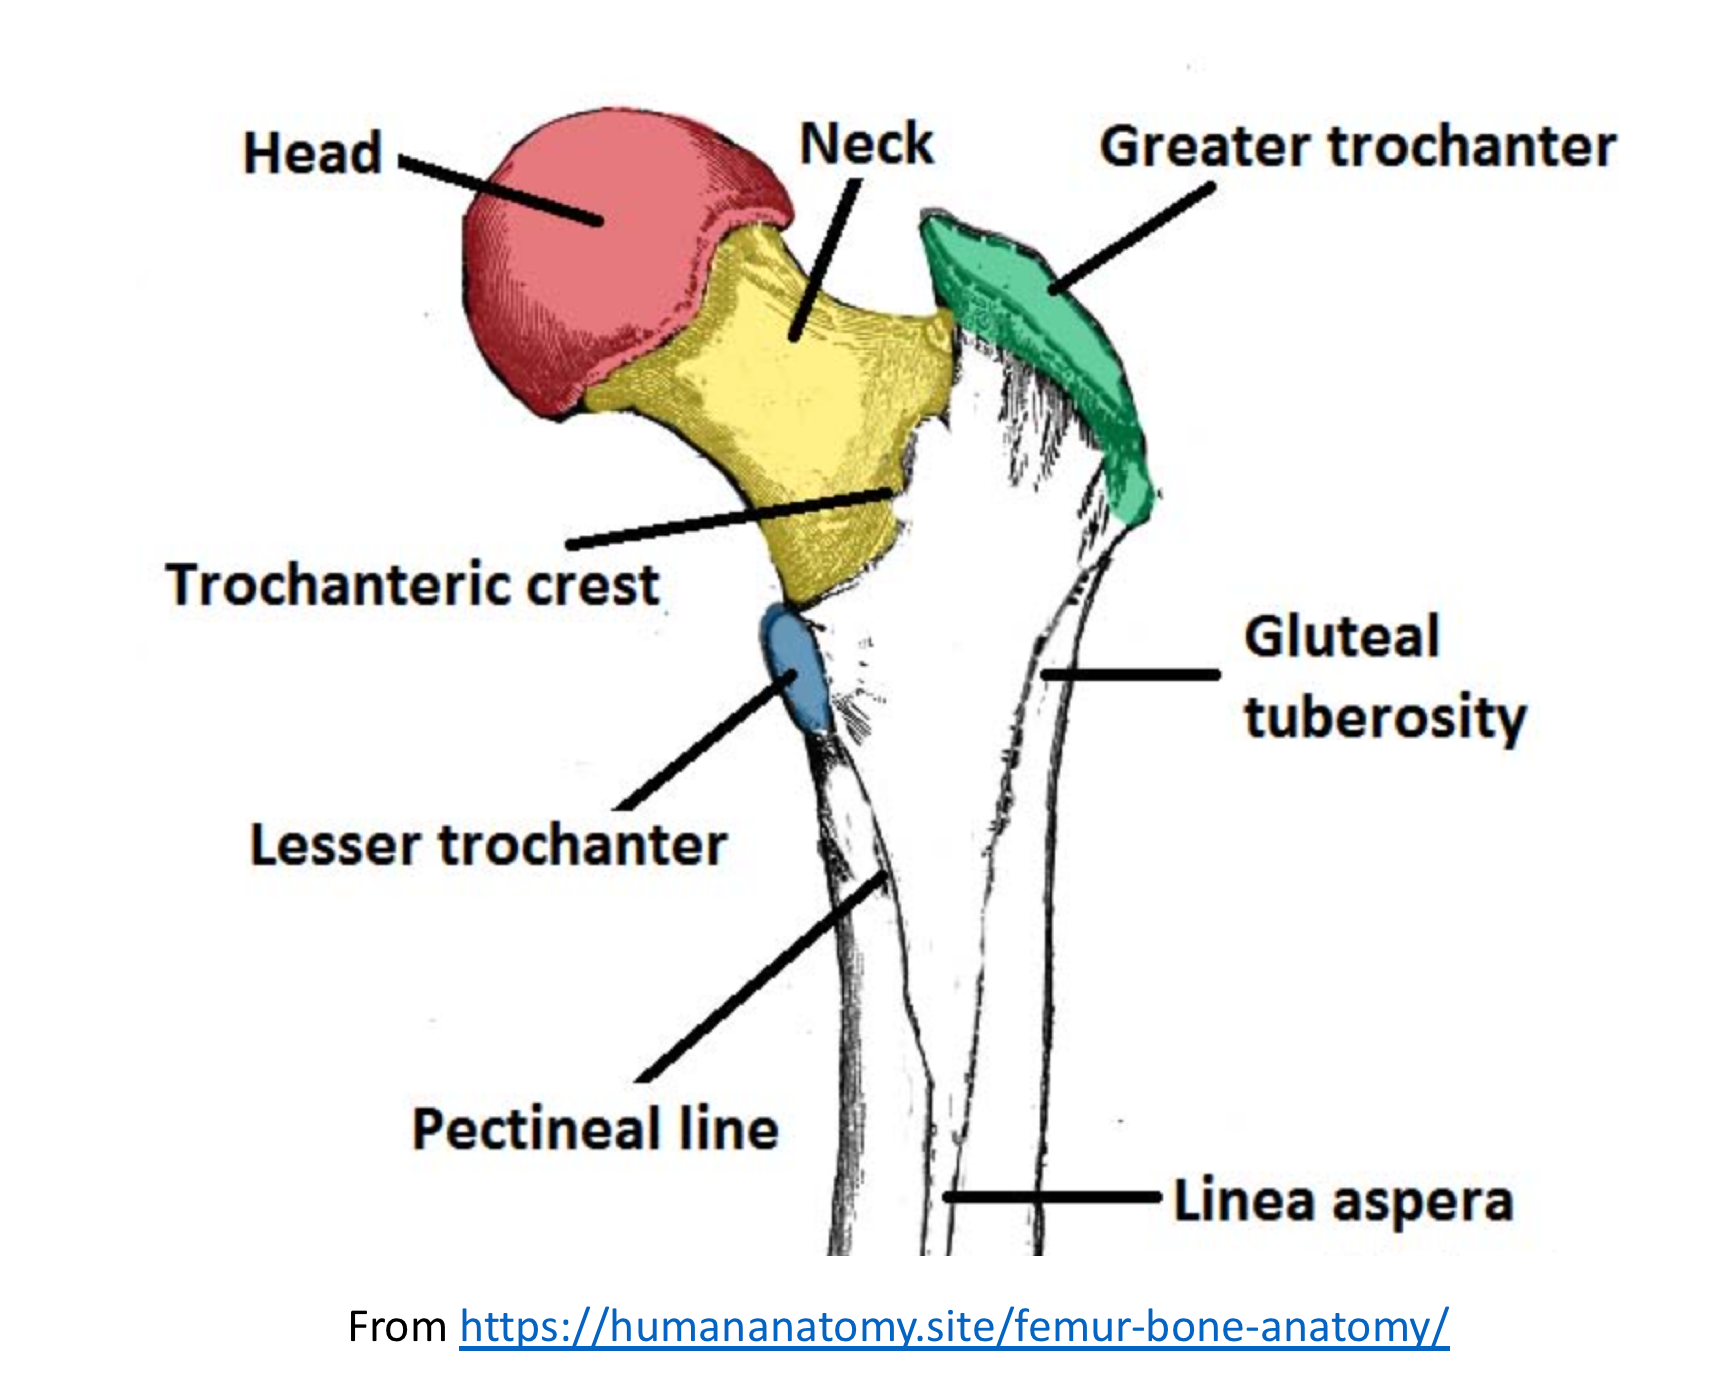 intertrochanteric fracture